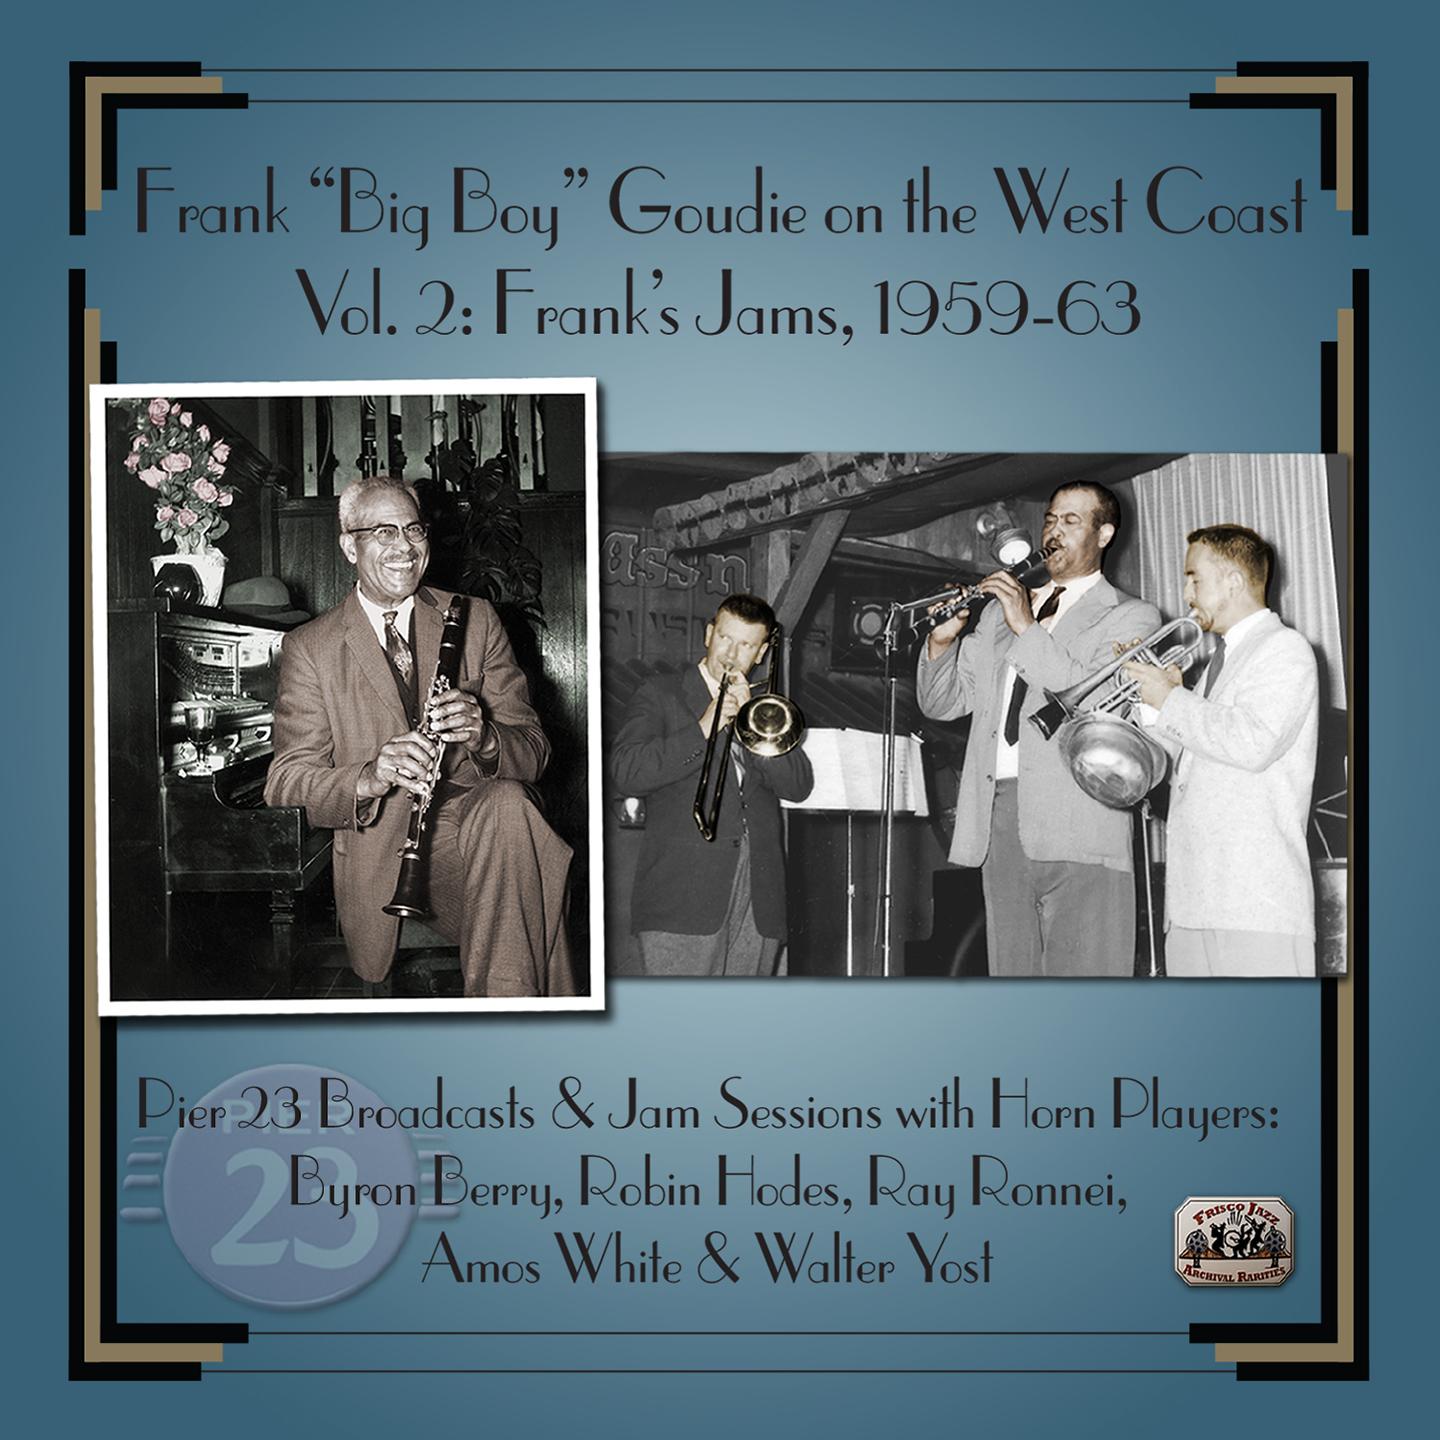 Frank "Big Boy" Goudie on the West Coast, Volume 2: Frank's Jams, 1959-63